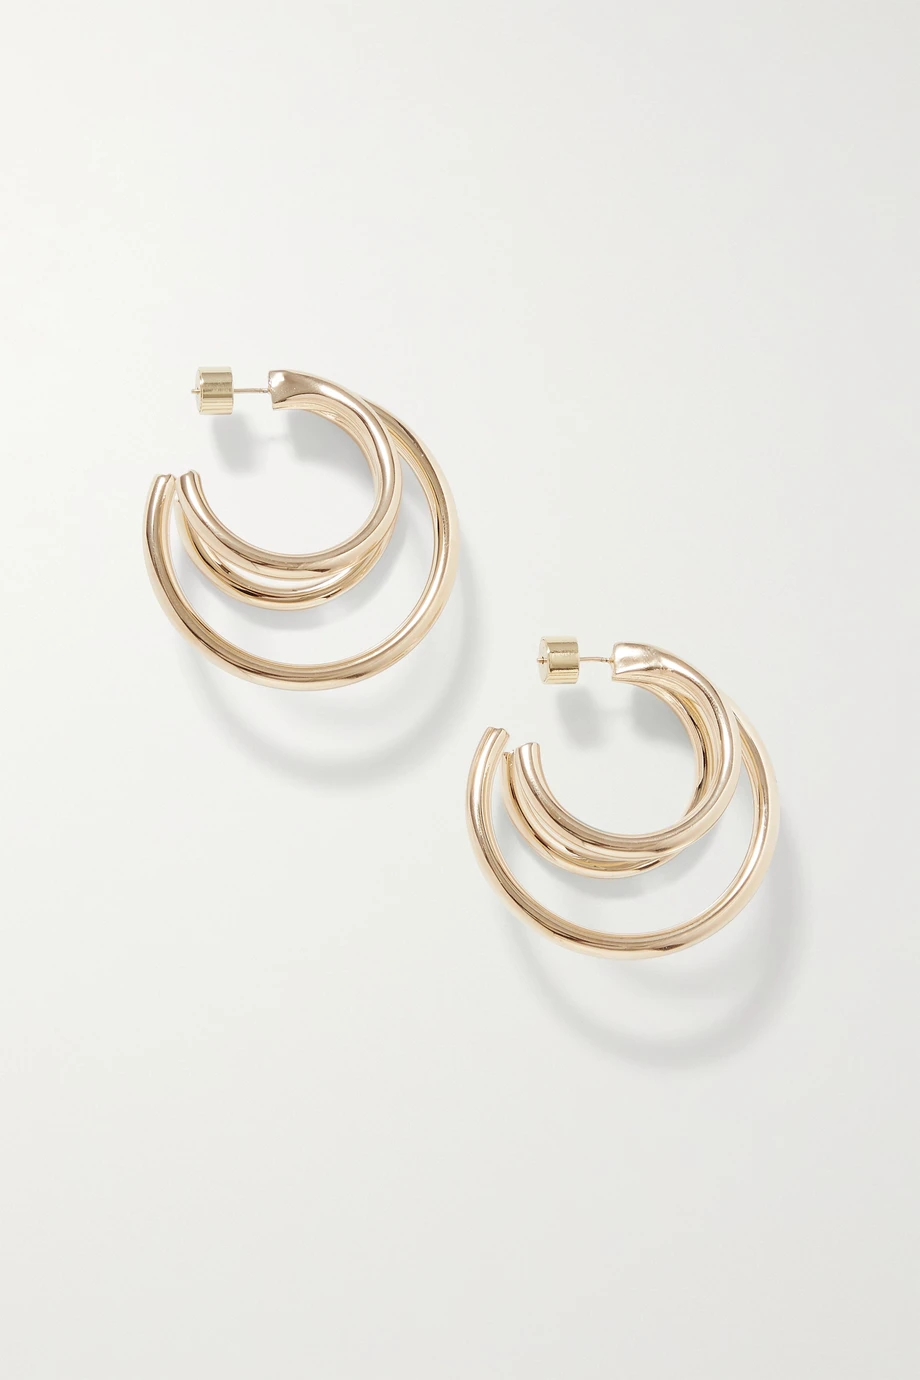 Triple Lilly gold-plated hoop earrings